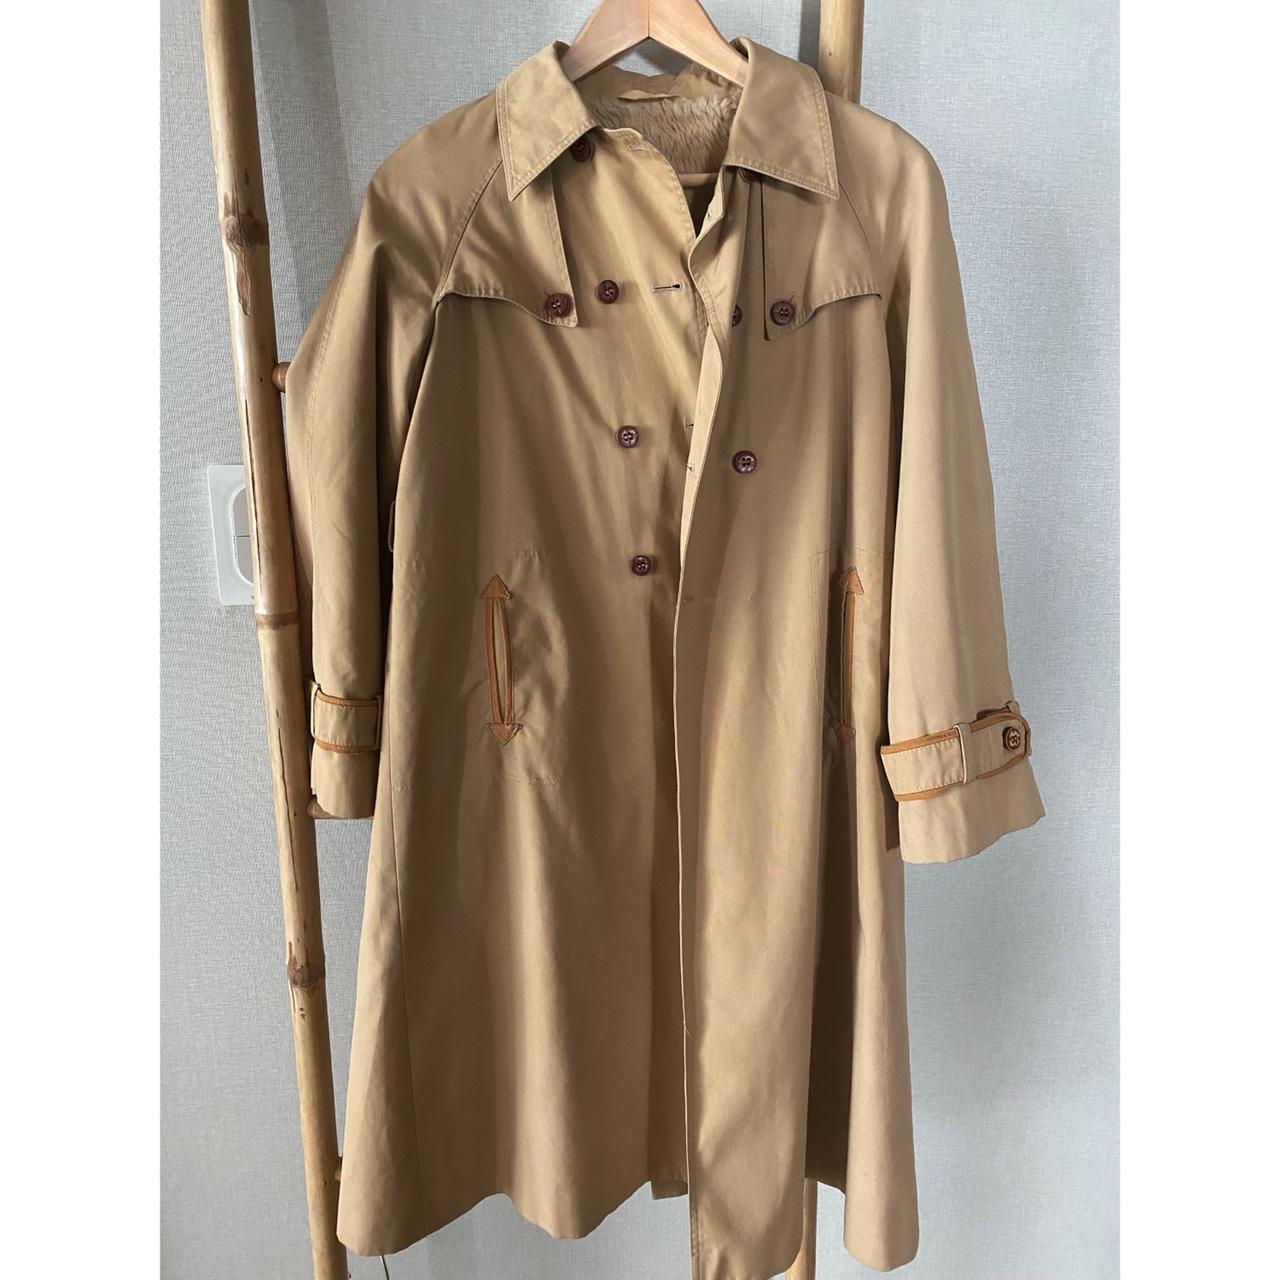 Fur lined vintage trench coat in very good... - Depop